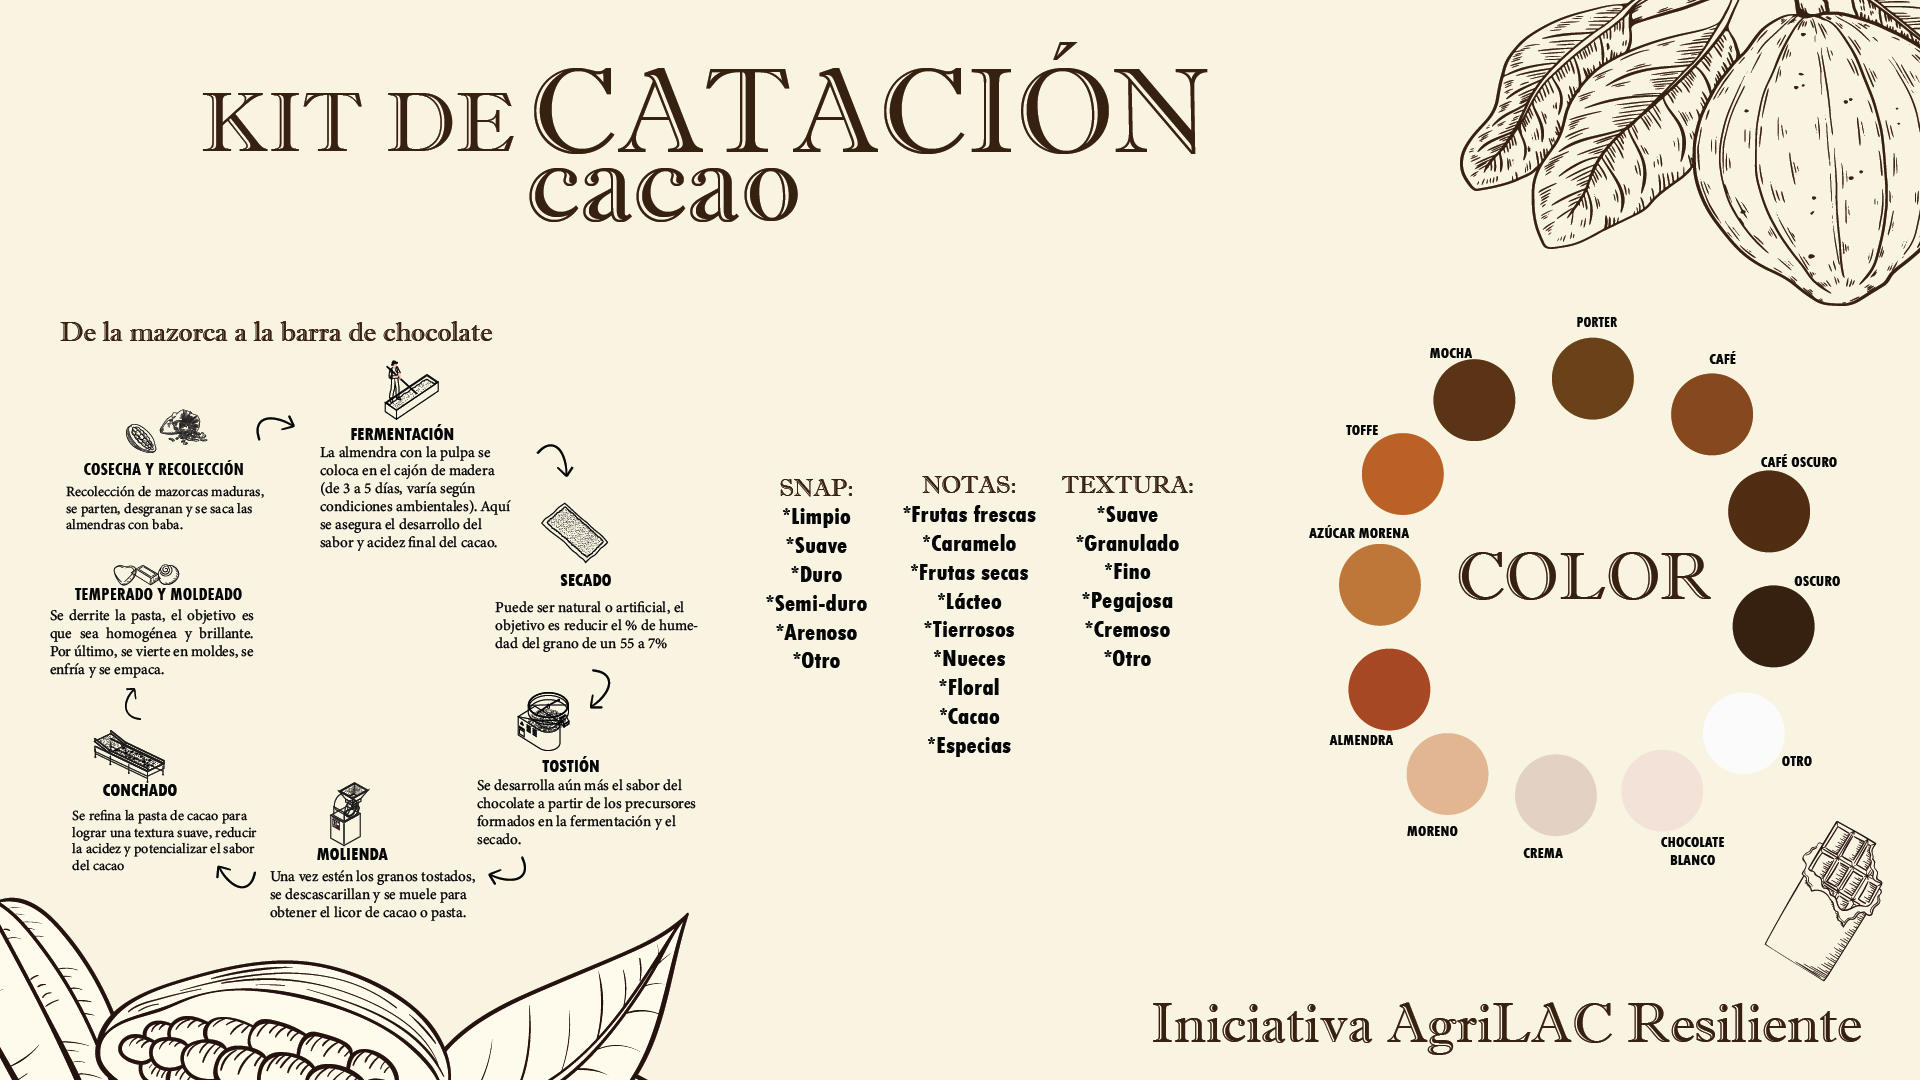 Kit de Catacion Cacao - Alliance Bioversity International - CIAT